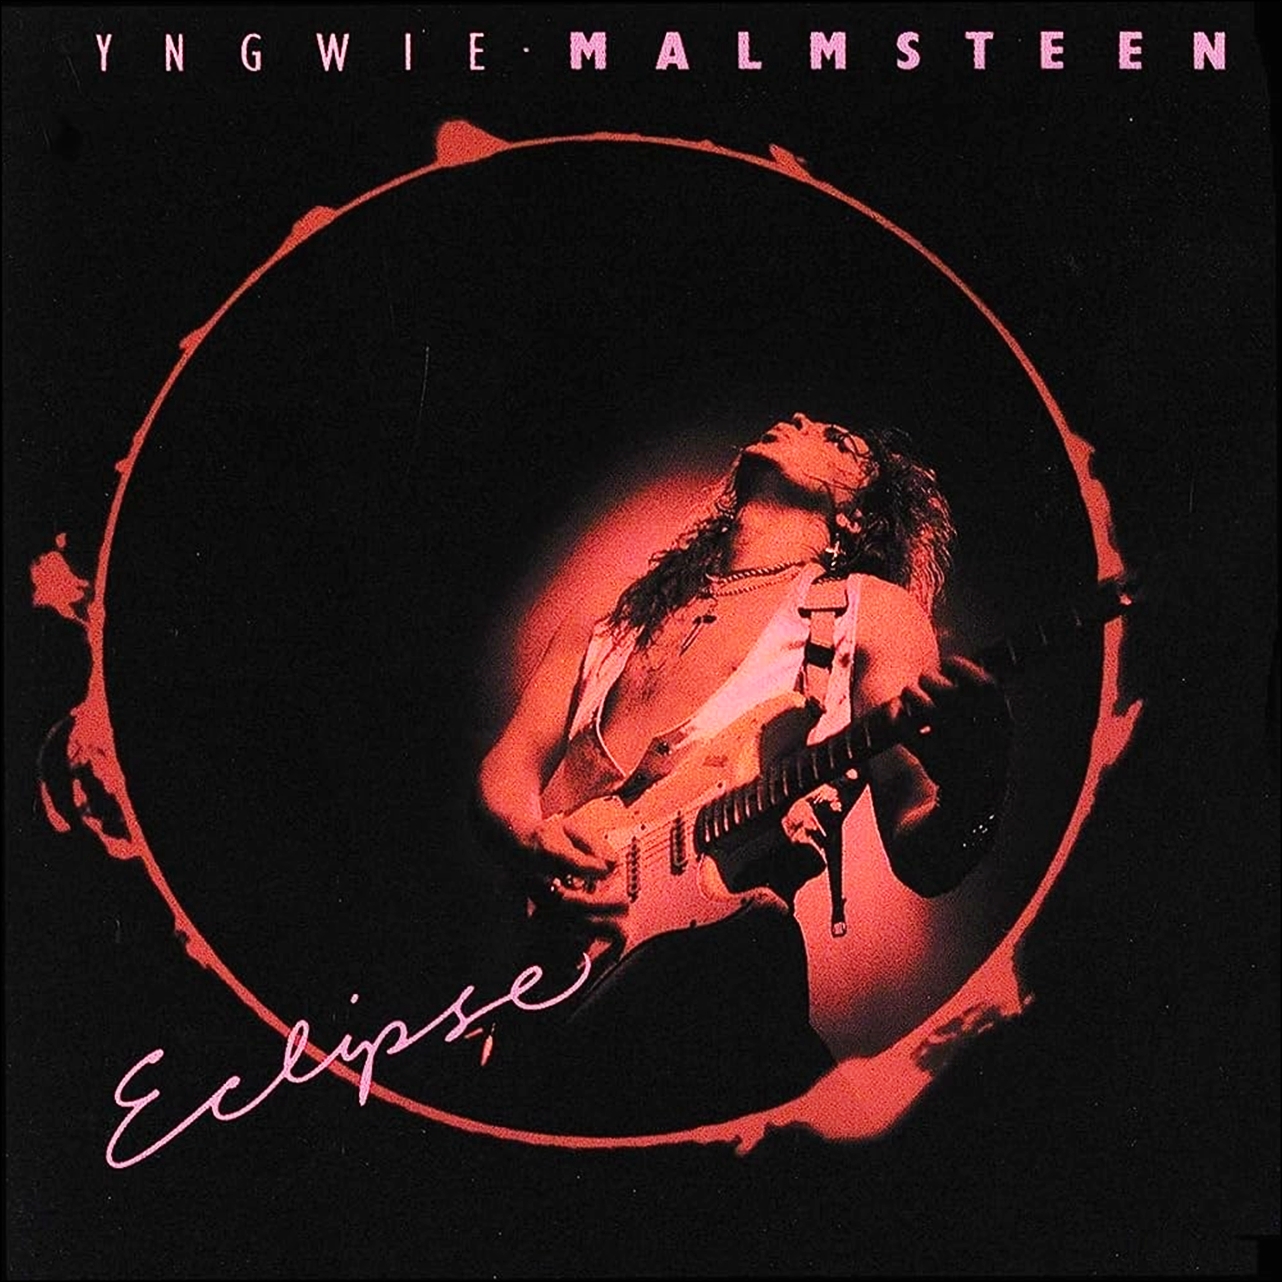 Eclipse TAB / Yngwie Malmsteen Guitar Slow Practice イングヴェイ エクリプス スウィープ基礎練習ゆっくり【Guitar Sweep Vol.19】